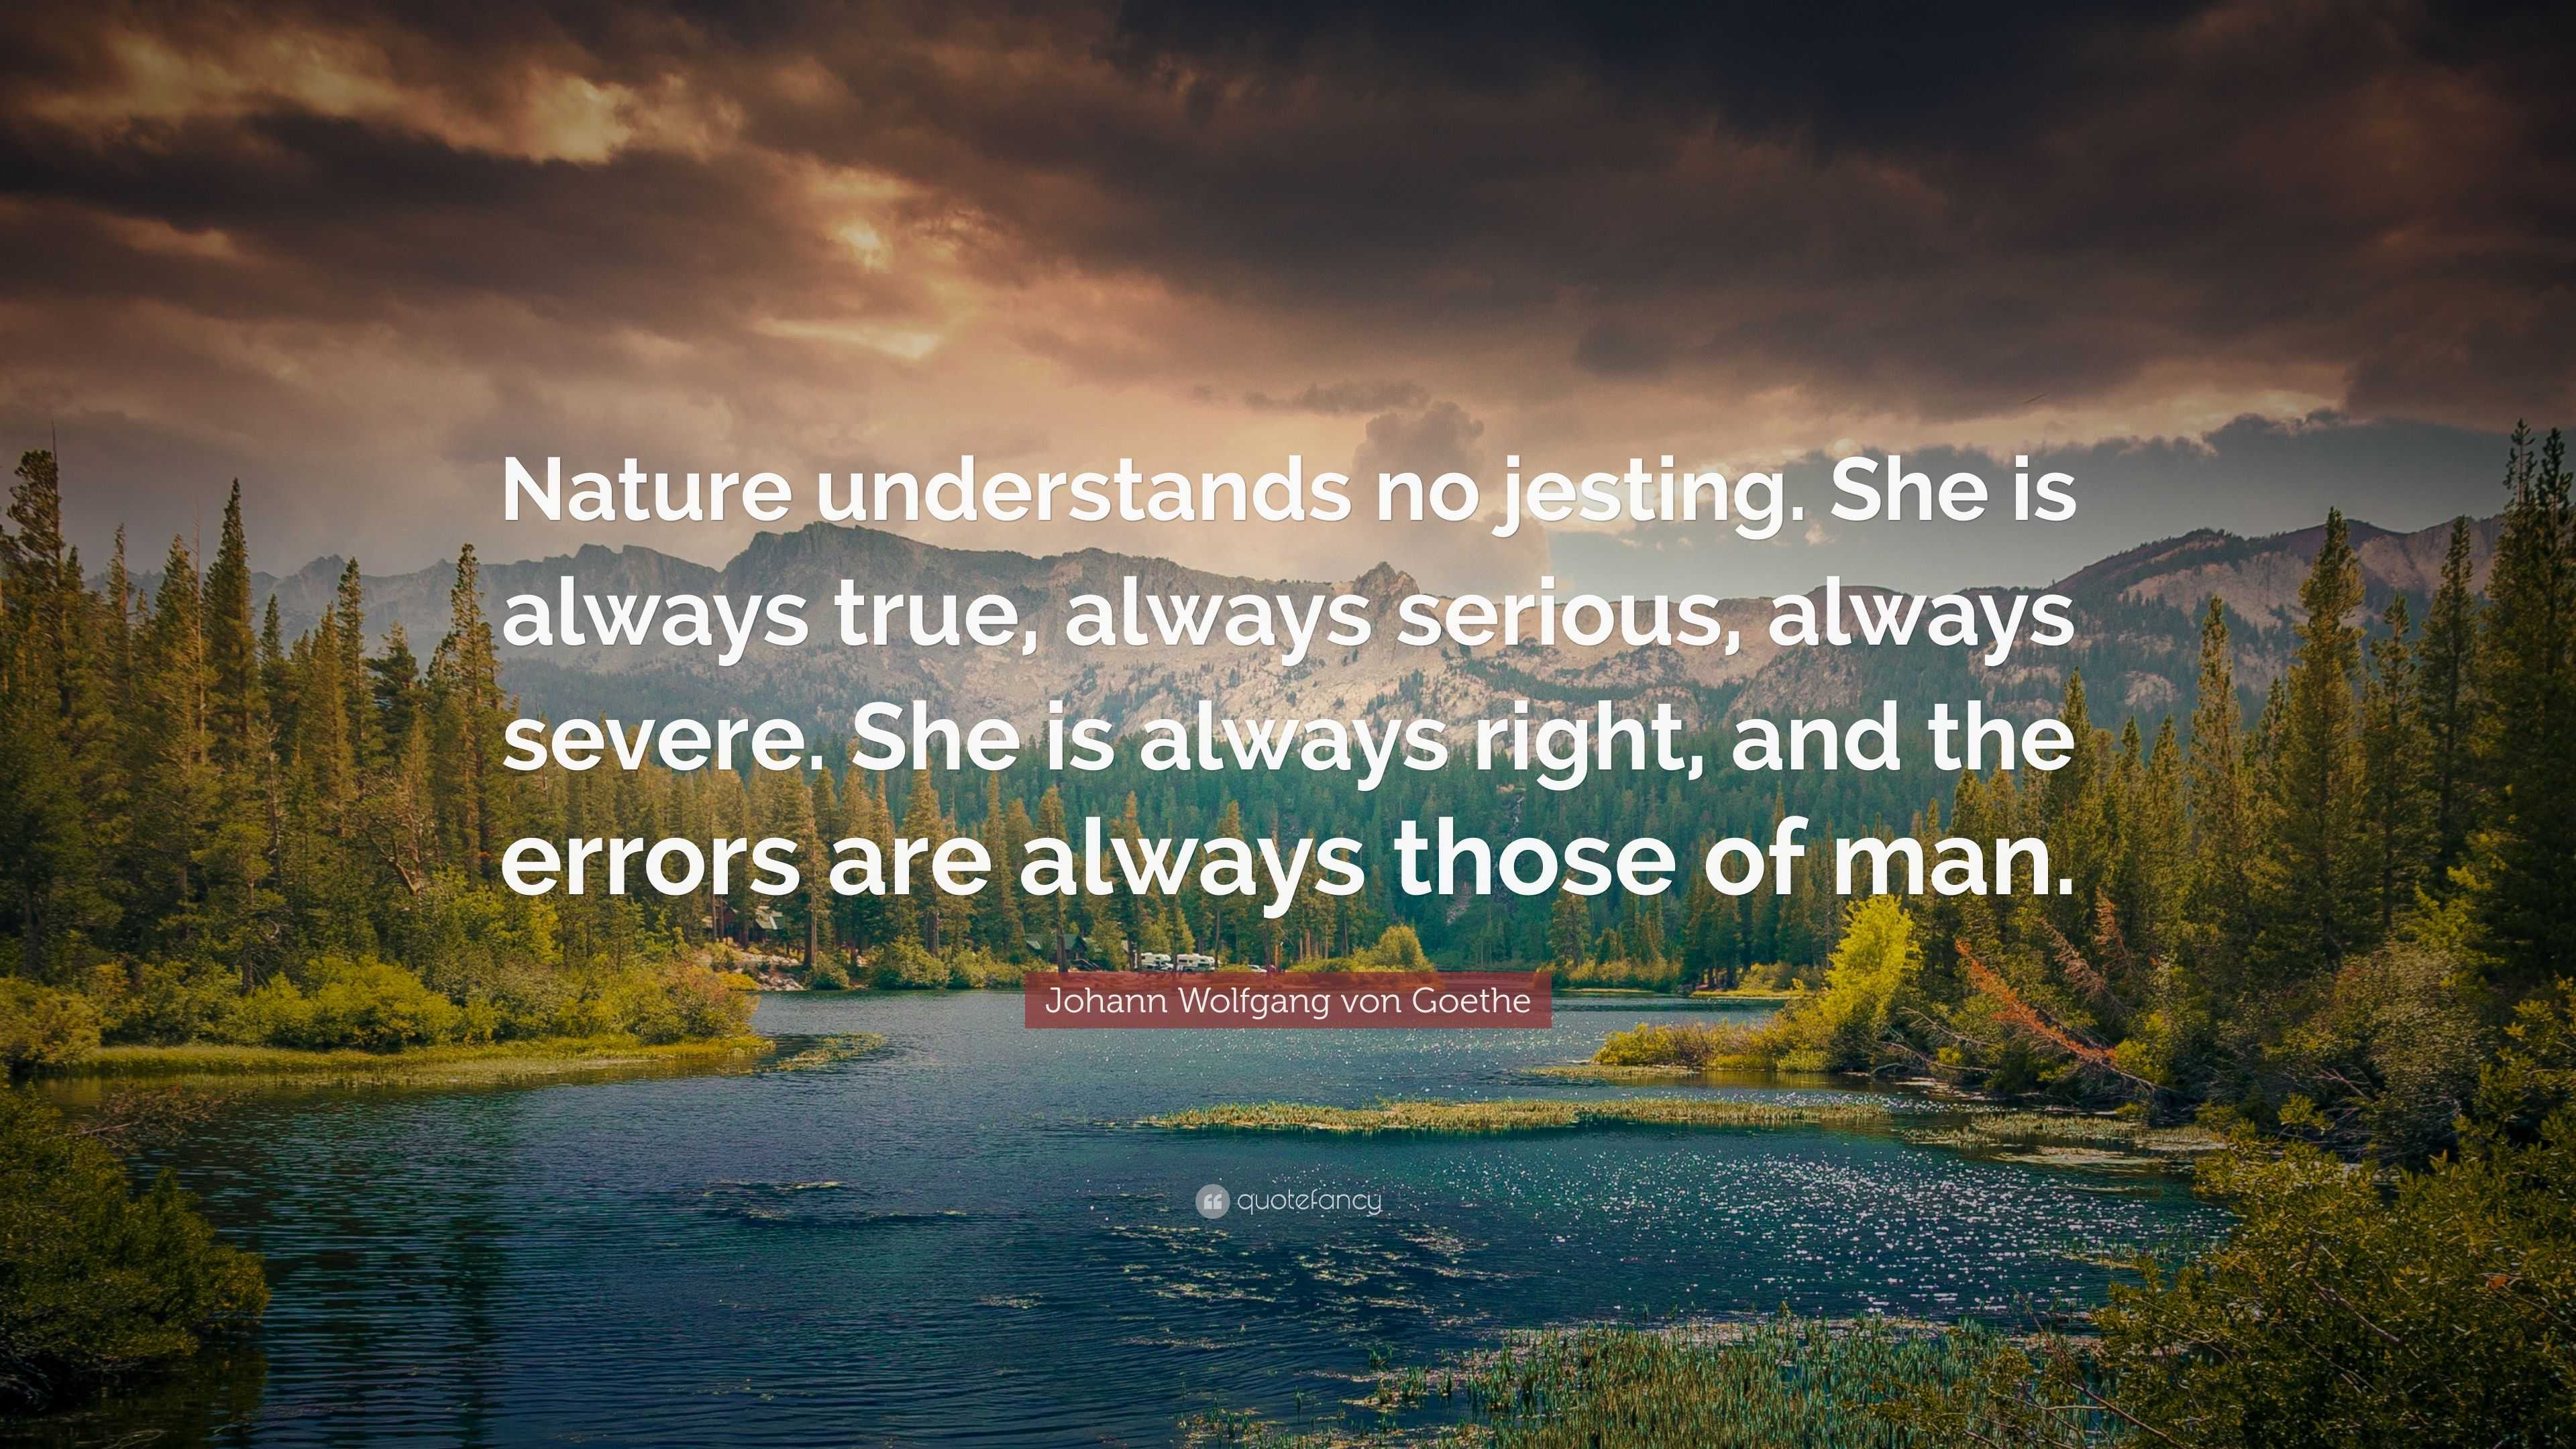 Johann Wolfgang von Goethe Quote: “Nature understands no jesting. She ...